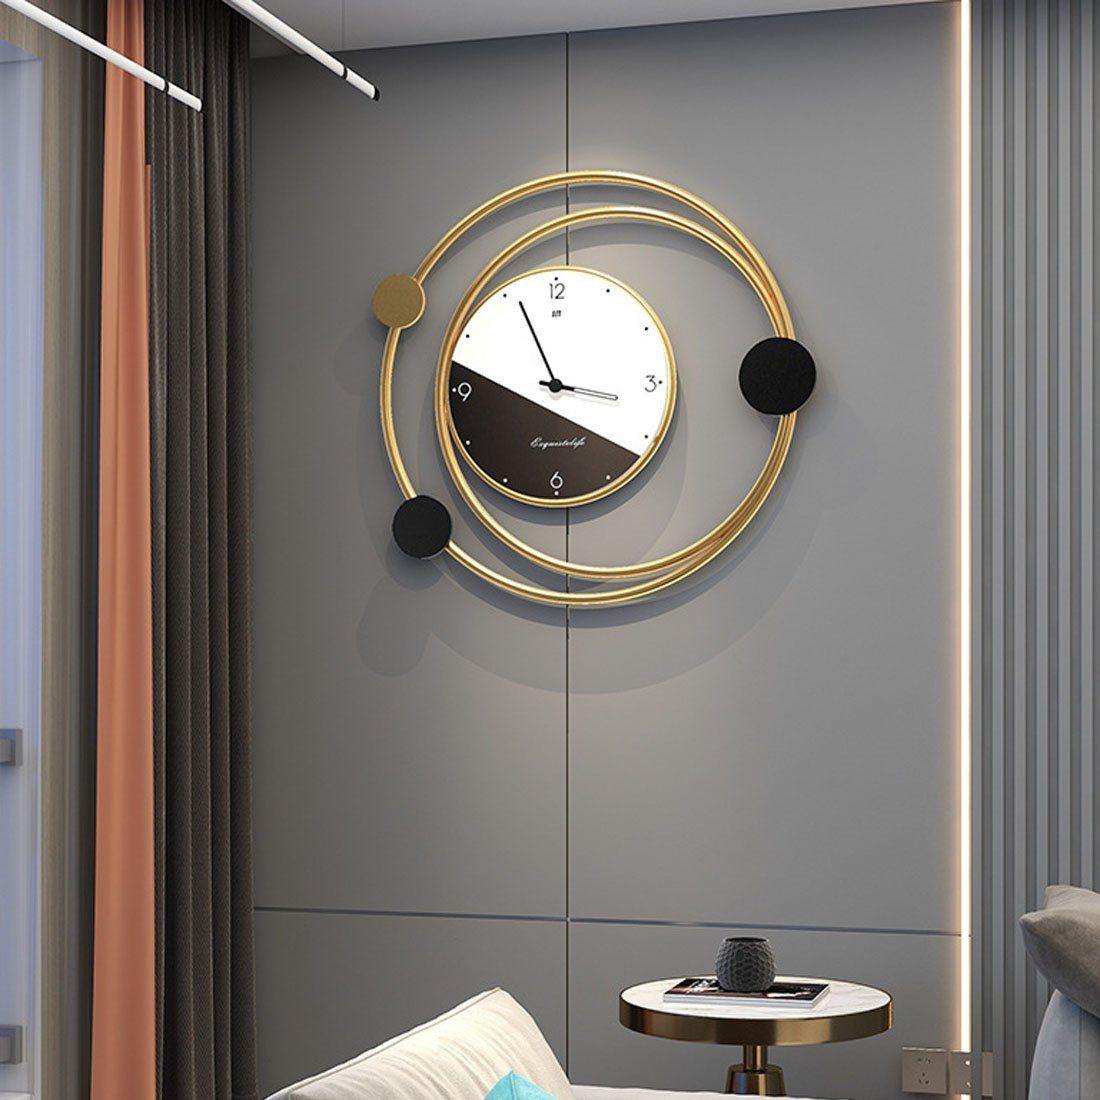 DÖRÖY dekorative Wanduhr, Eingangs-Wanduhr, Wanduhr 51cm stille einfache Uhr Moderne